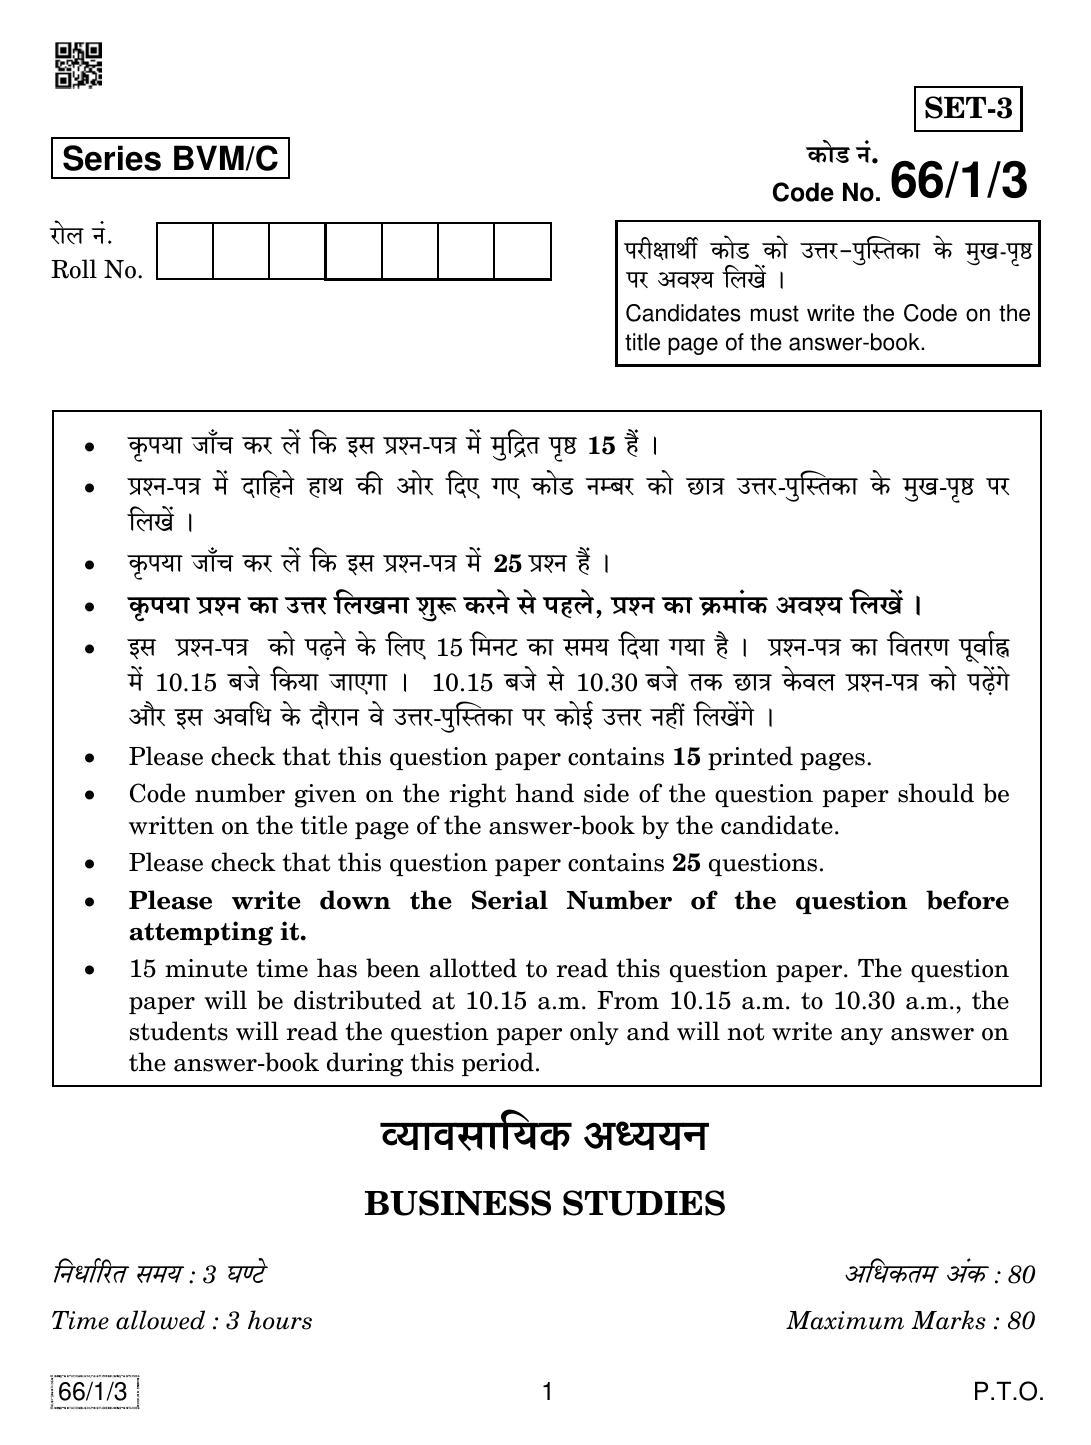 CBSE Class 12 66-1-3 BUSINESS STUDIES 2019 Compartment Question Paper - Page 1